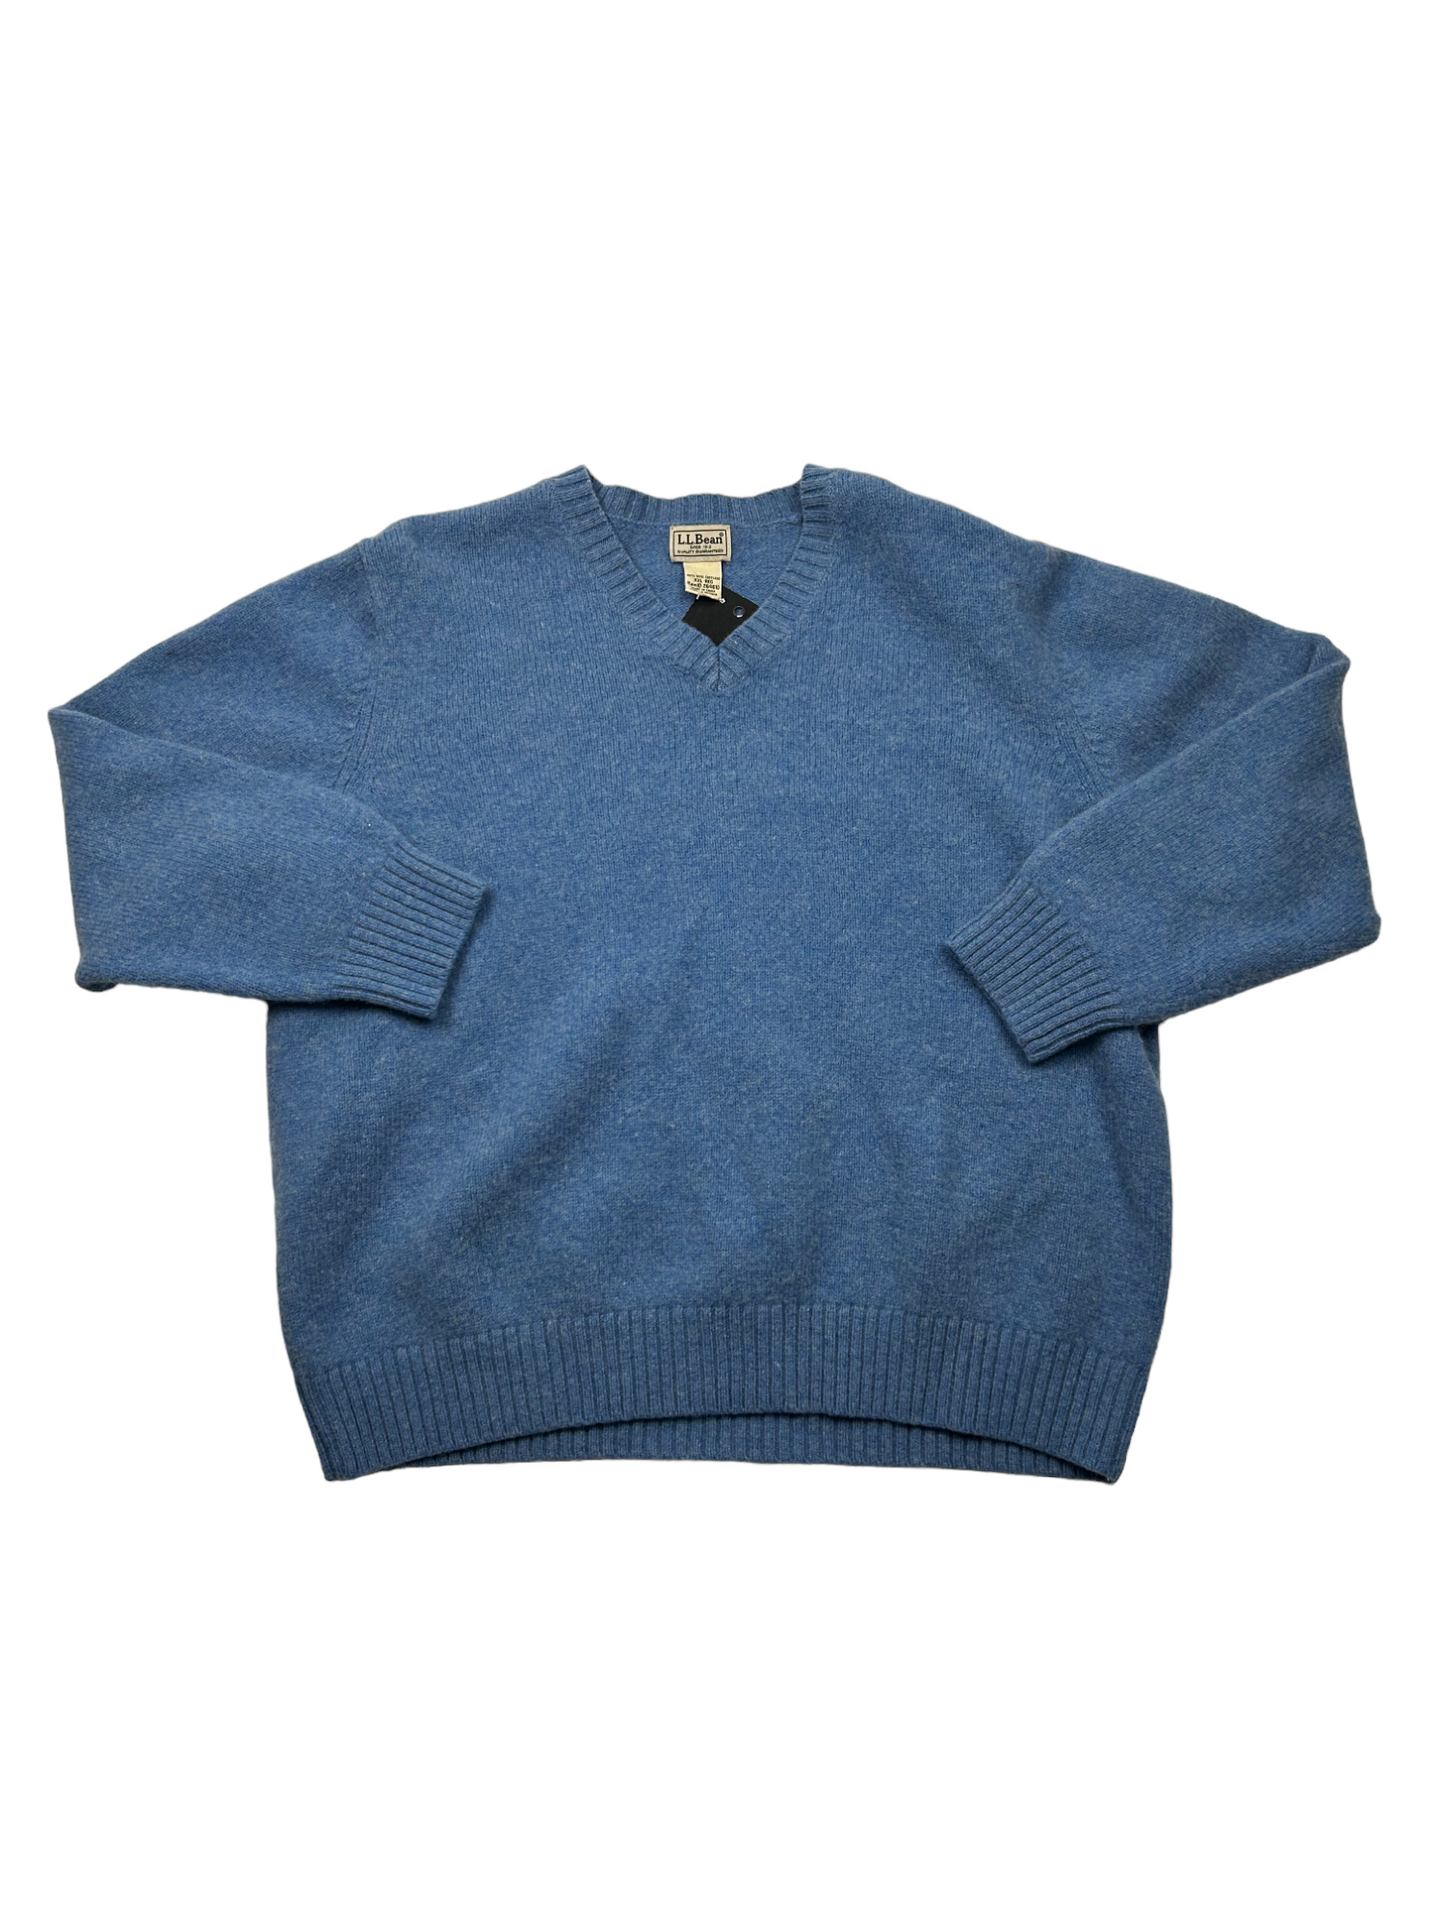 LL Bean Blue Sweater